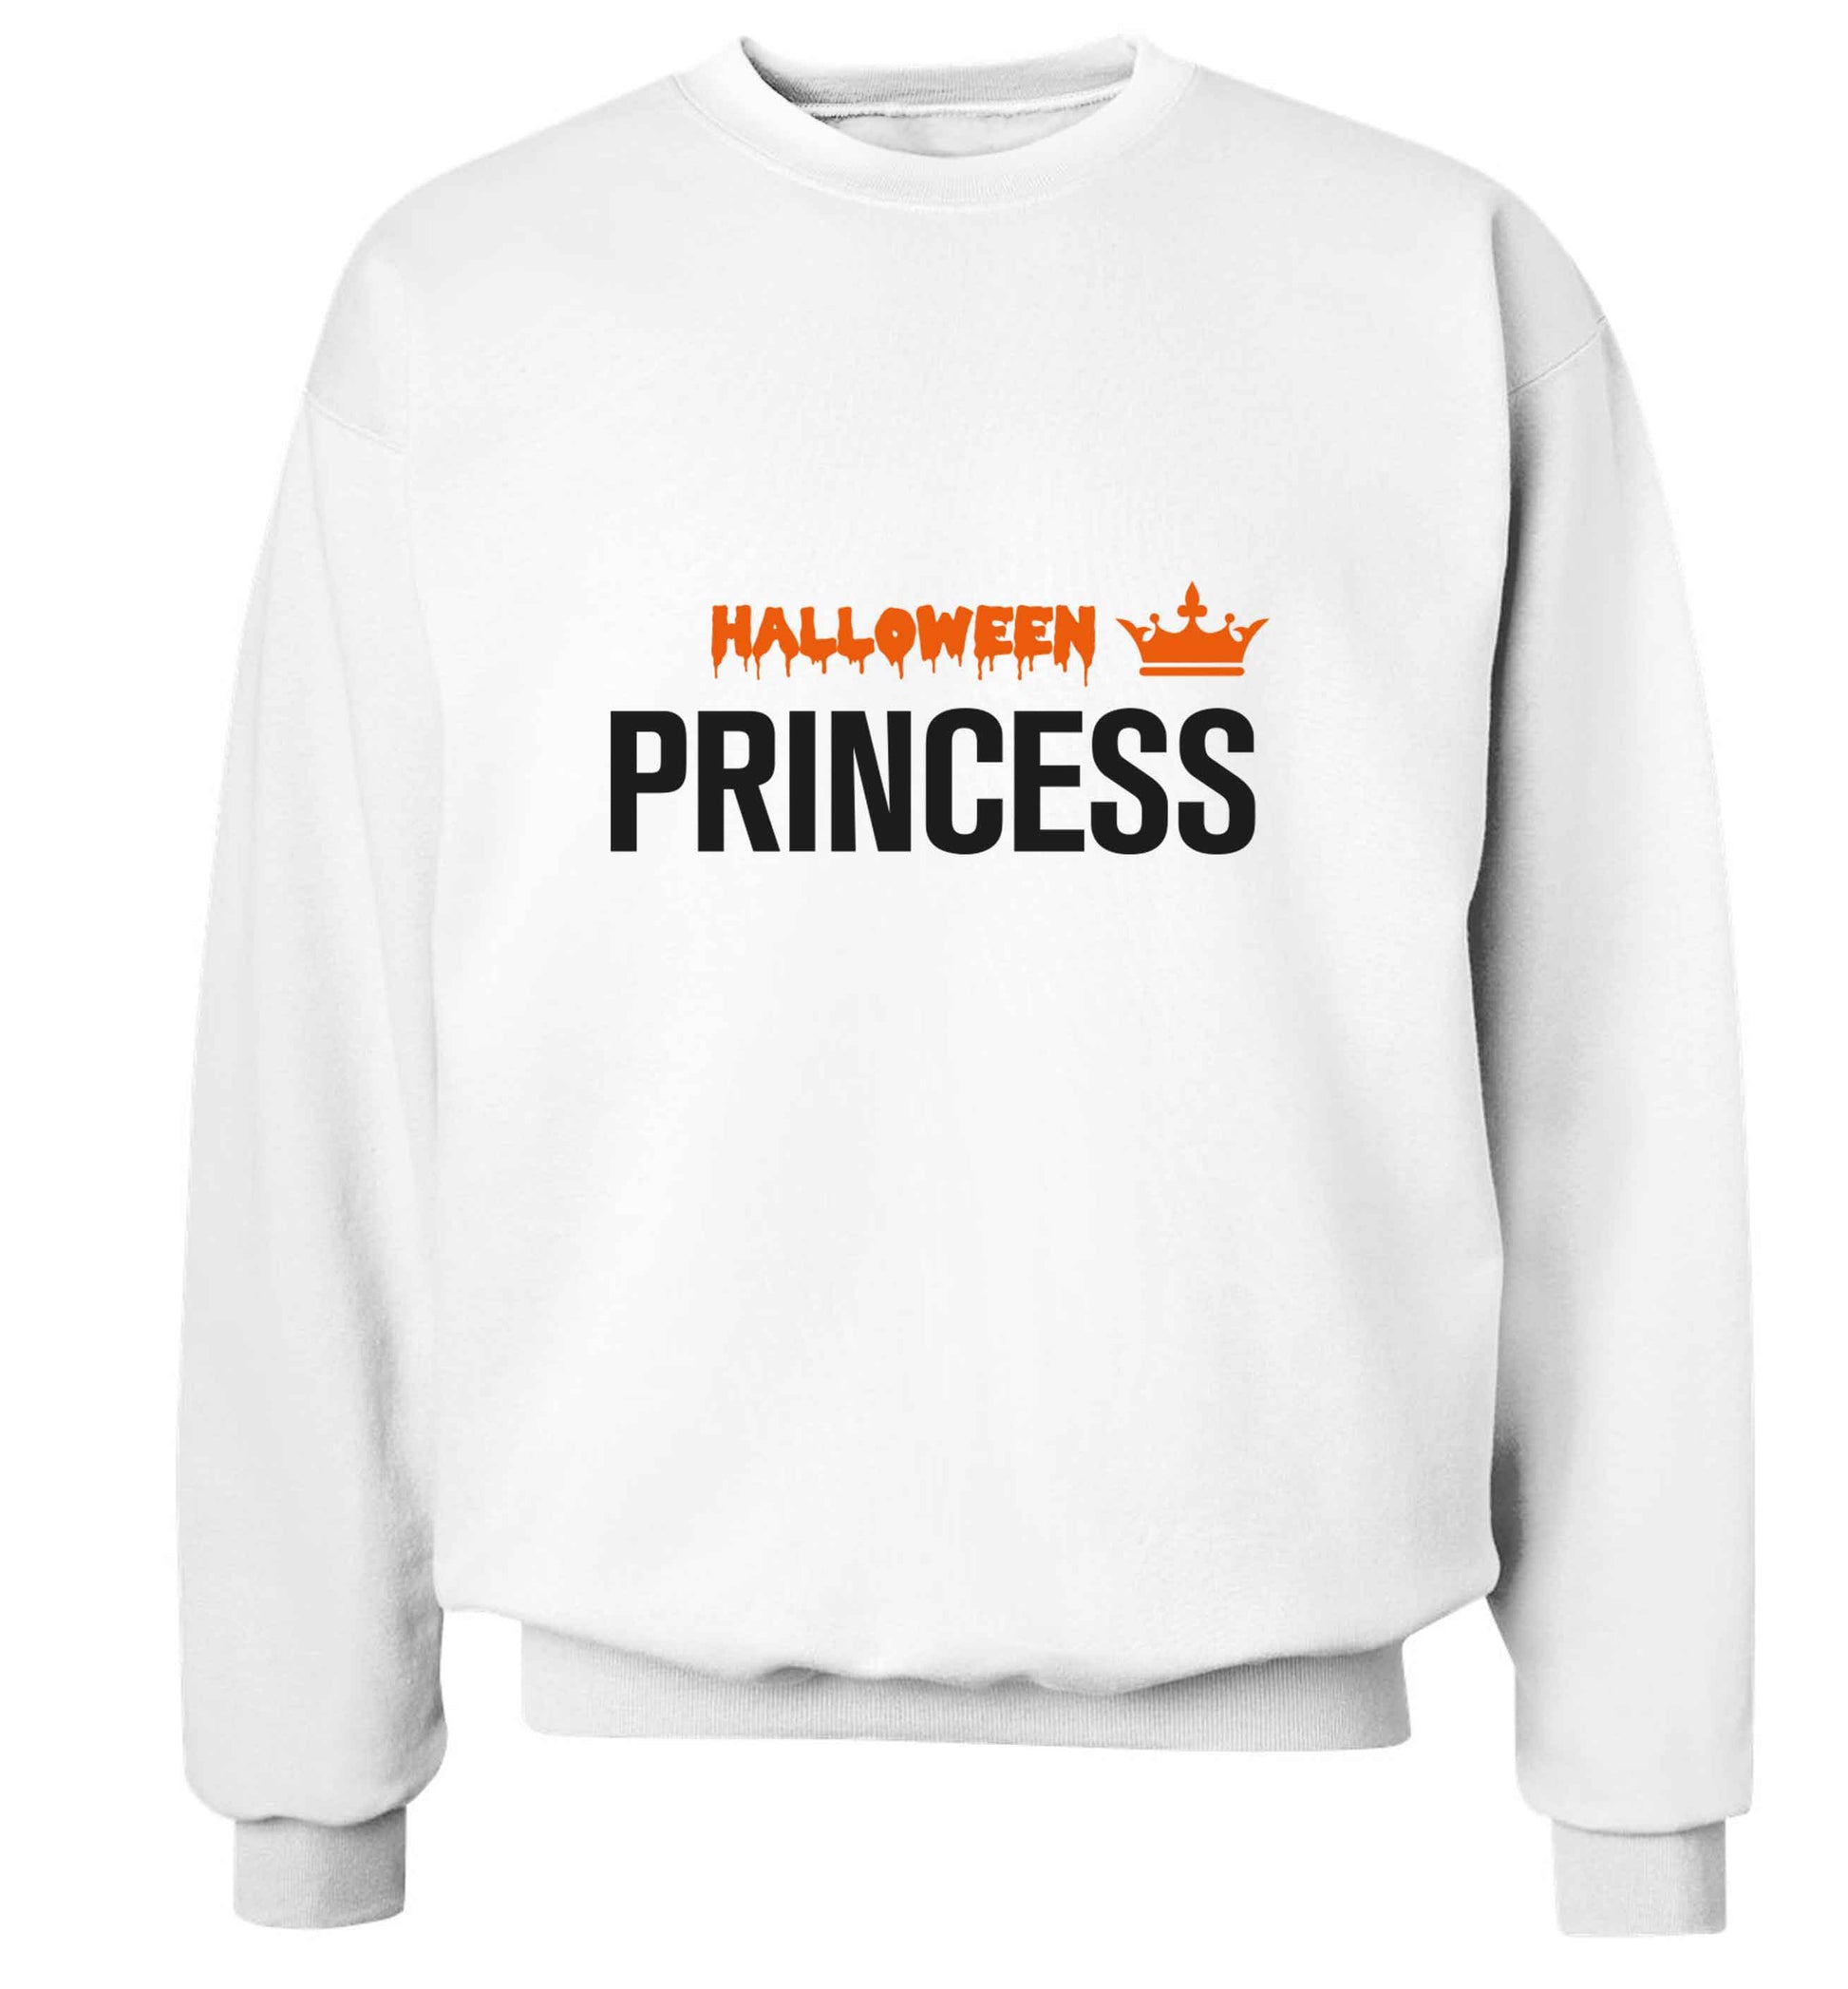 Halloween princess adult's unisex white sweater 2XL